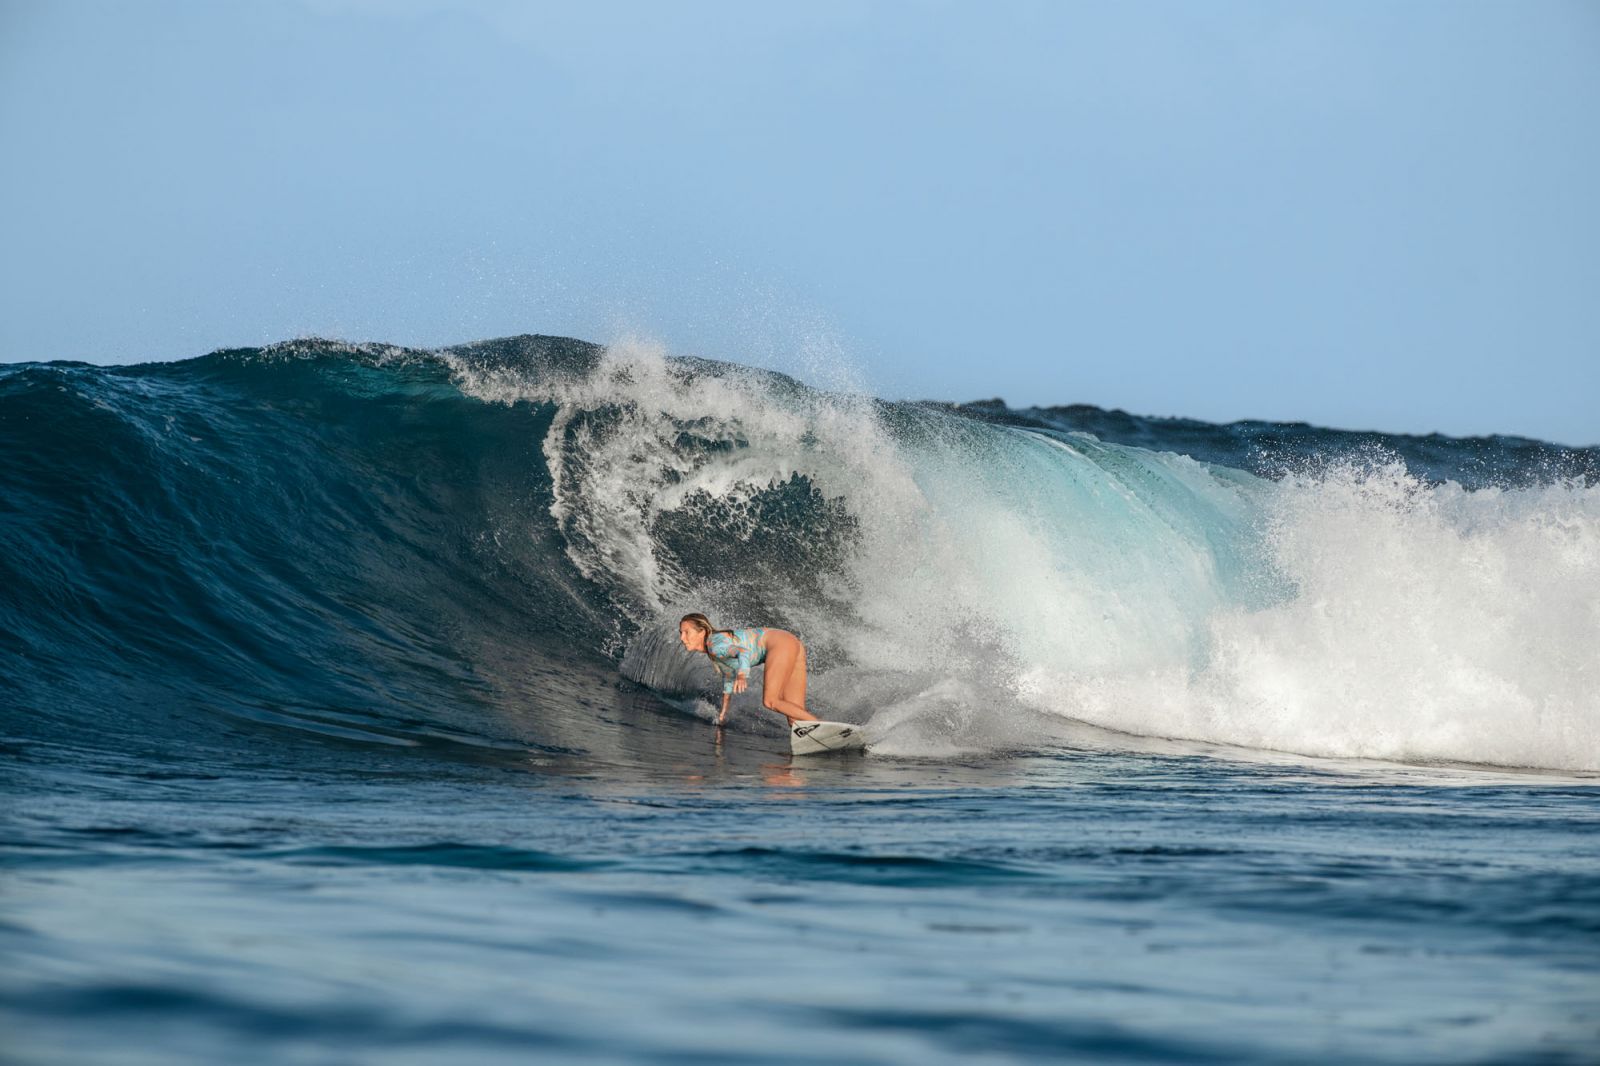 Steph Gilmore ROXY Pro Surf